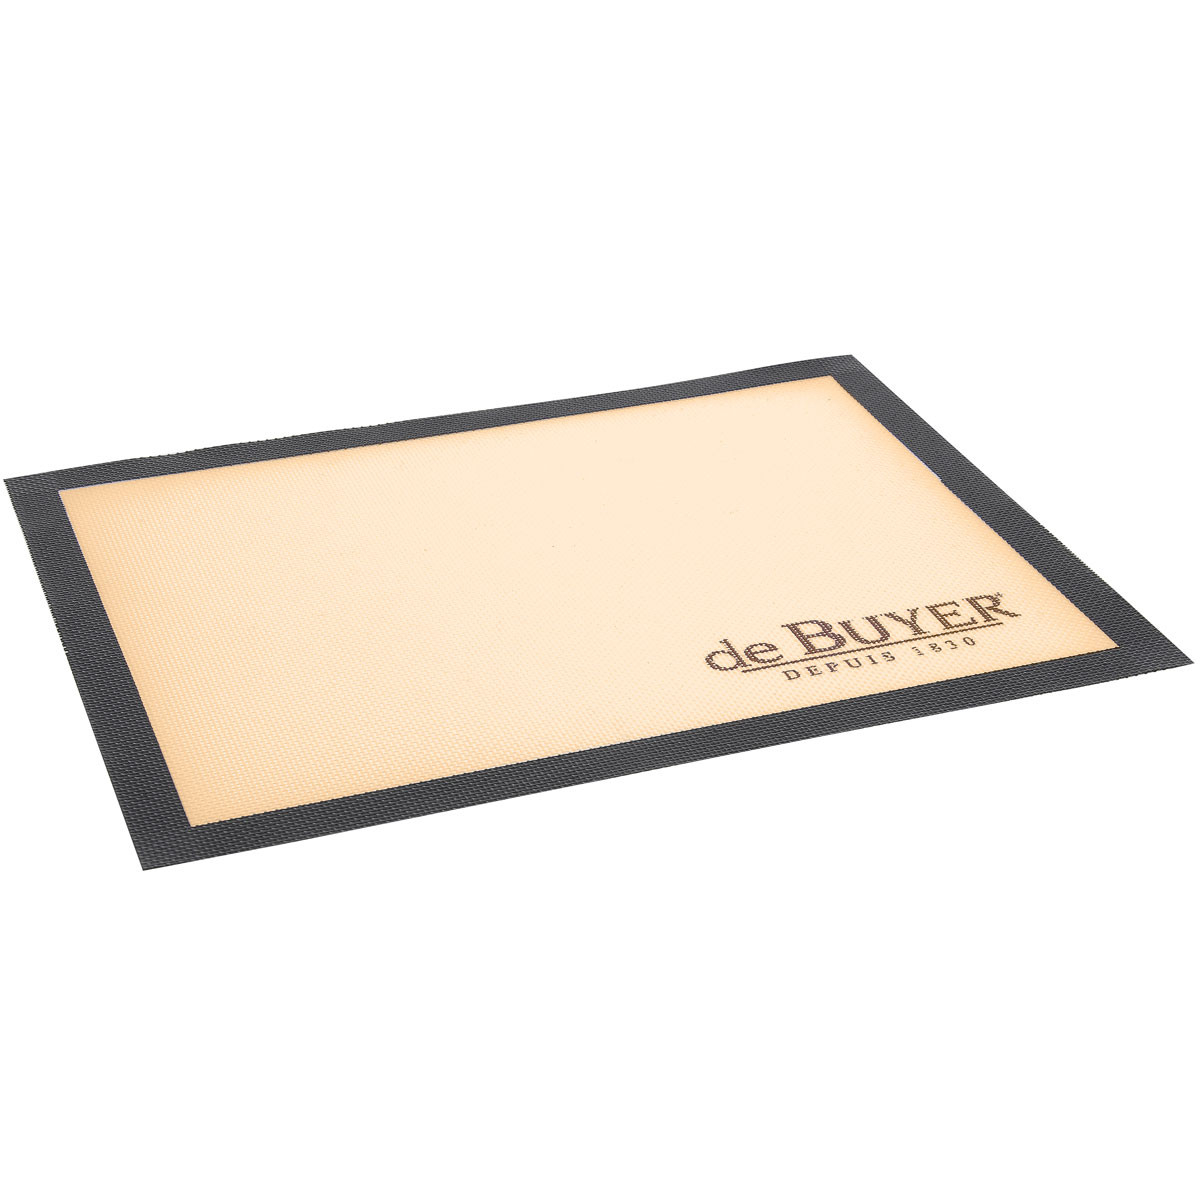 de Buyer Patisserie Silikon-Backmatte Airmat gelocht 58x38 cm / mit Antihaft-Eigenschaften